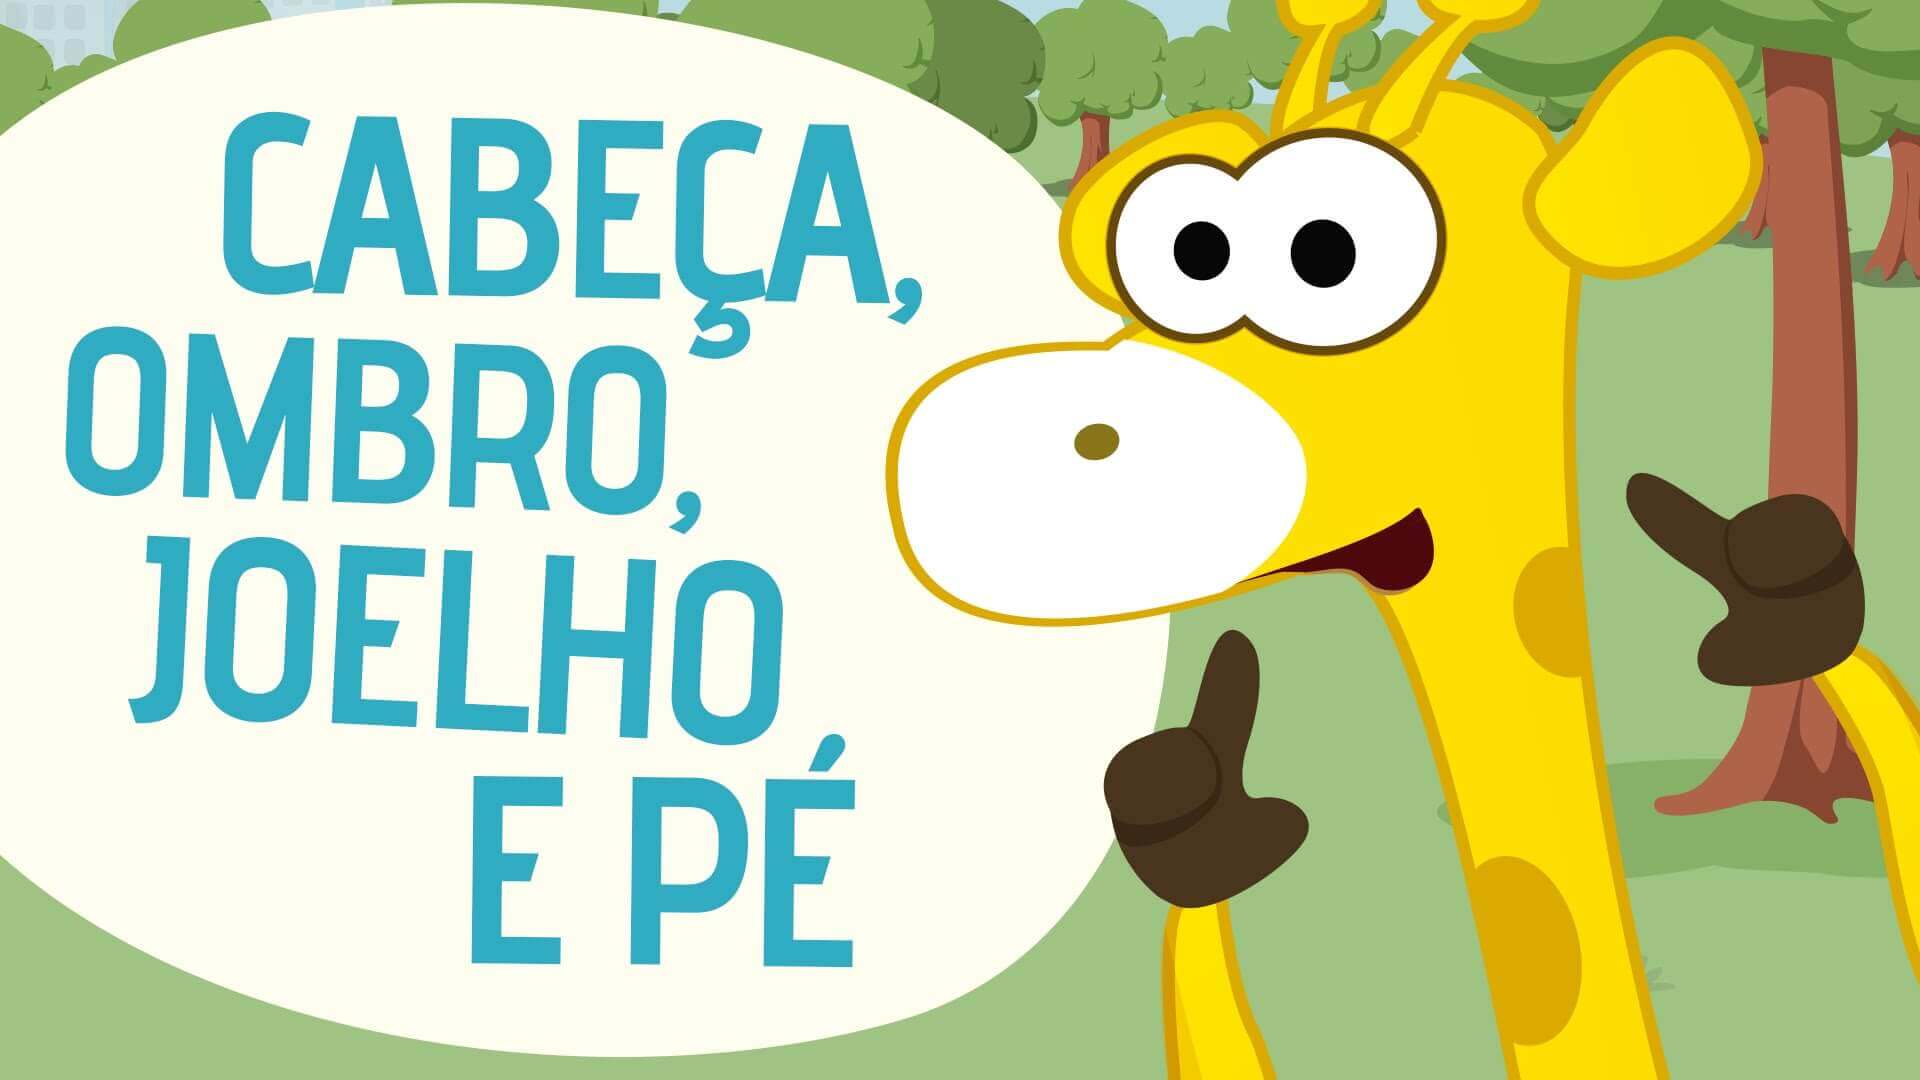 Песня на португальском языке Cabeça, ombro, joelho e pé